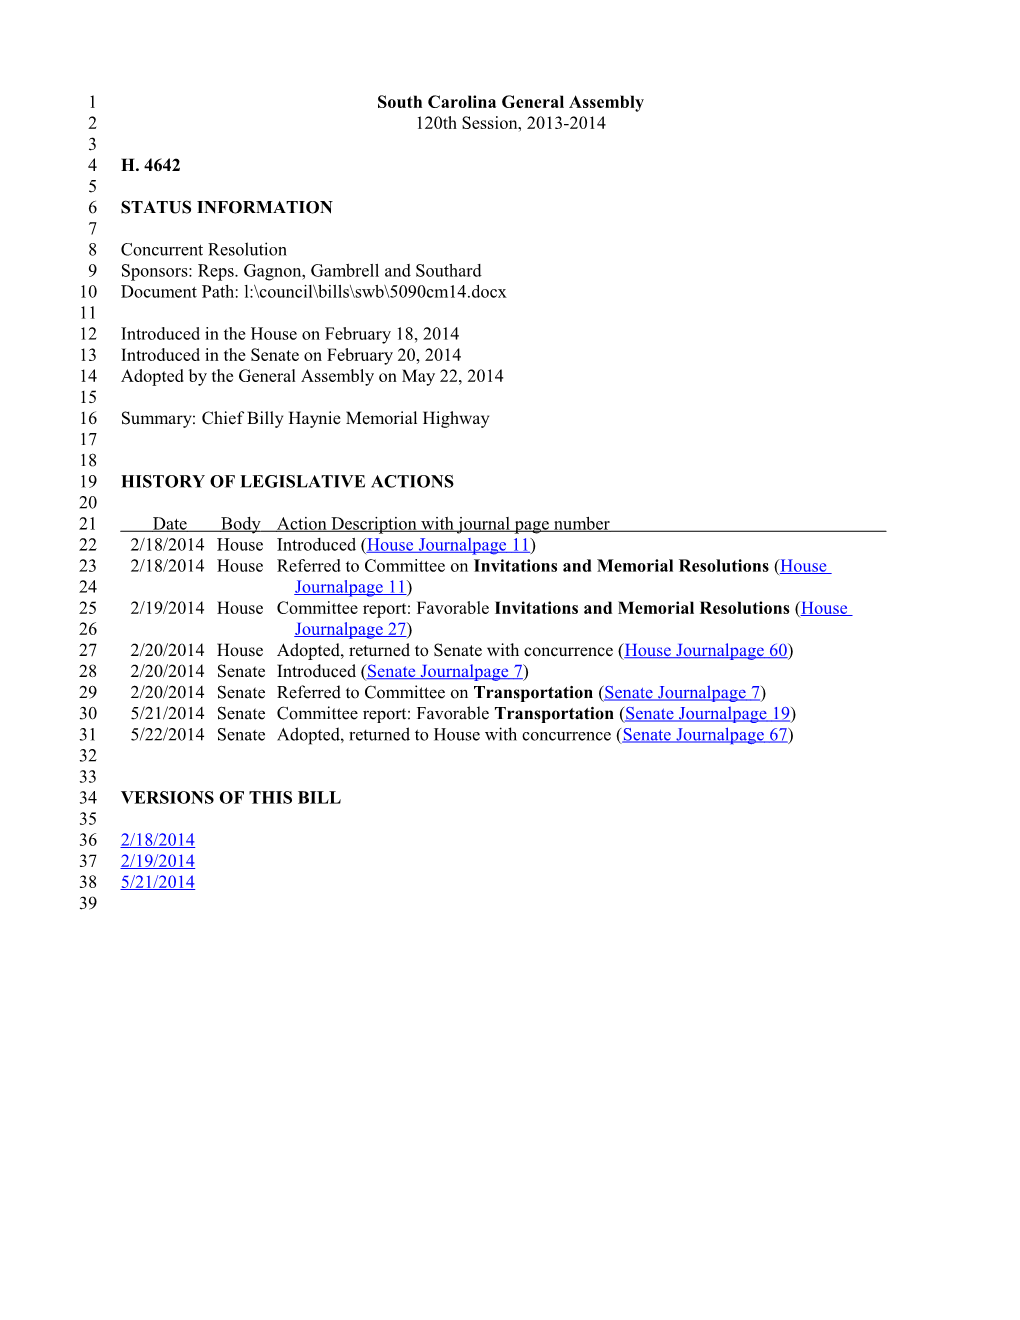 2013-2014 Bill 4642: Chief Billy Haynie Memorial Highway - South Carolina Legislature Online